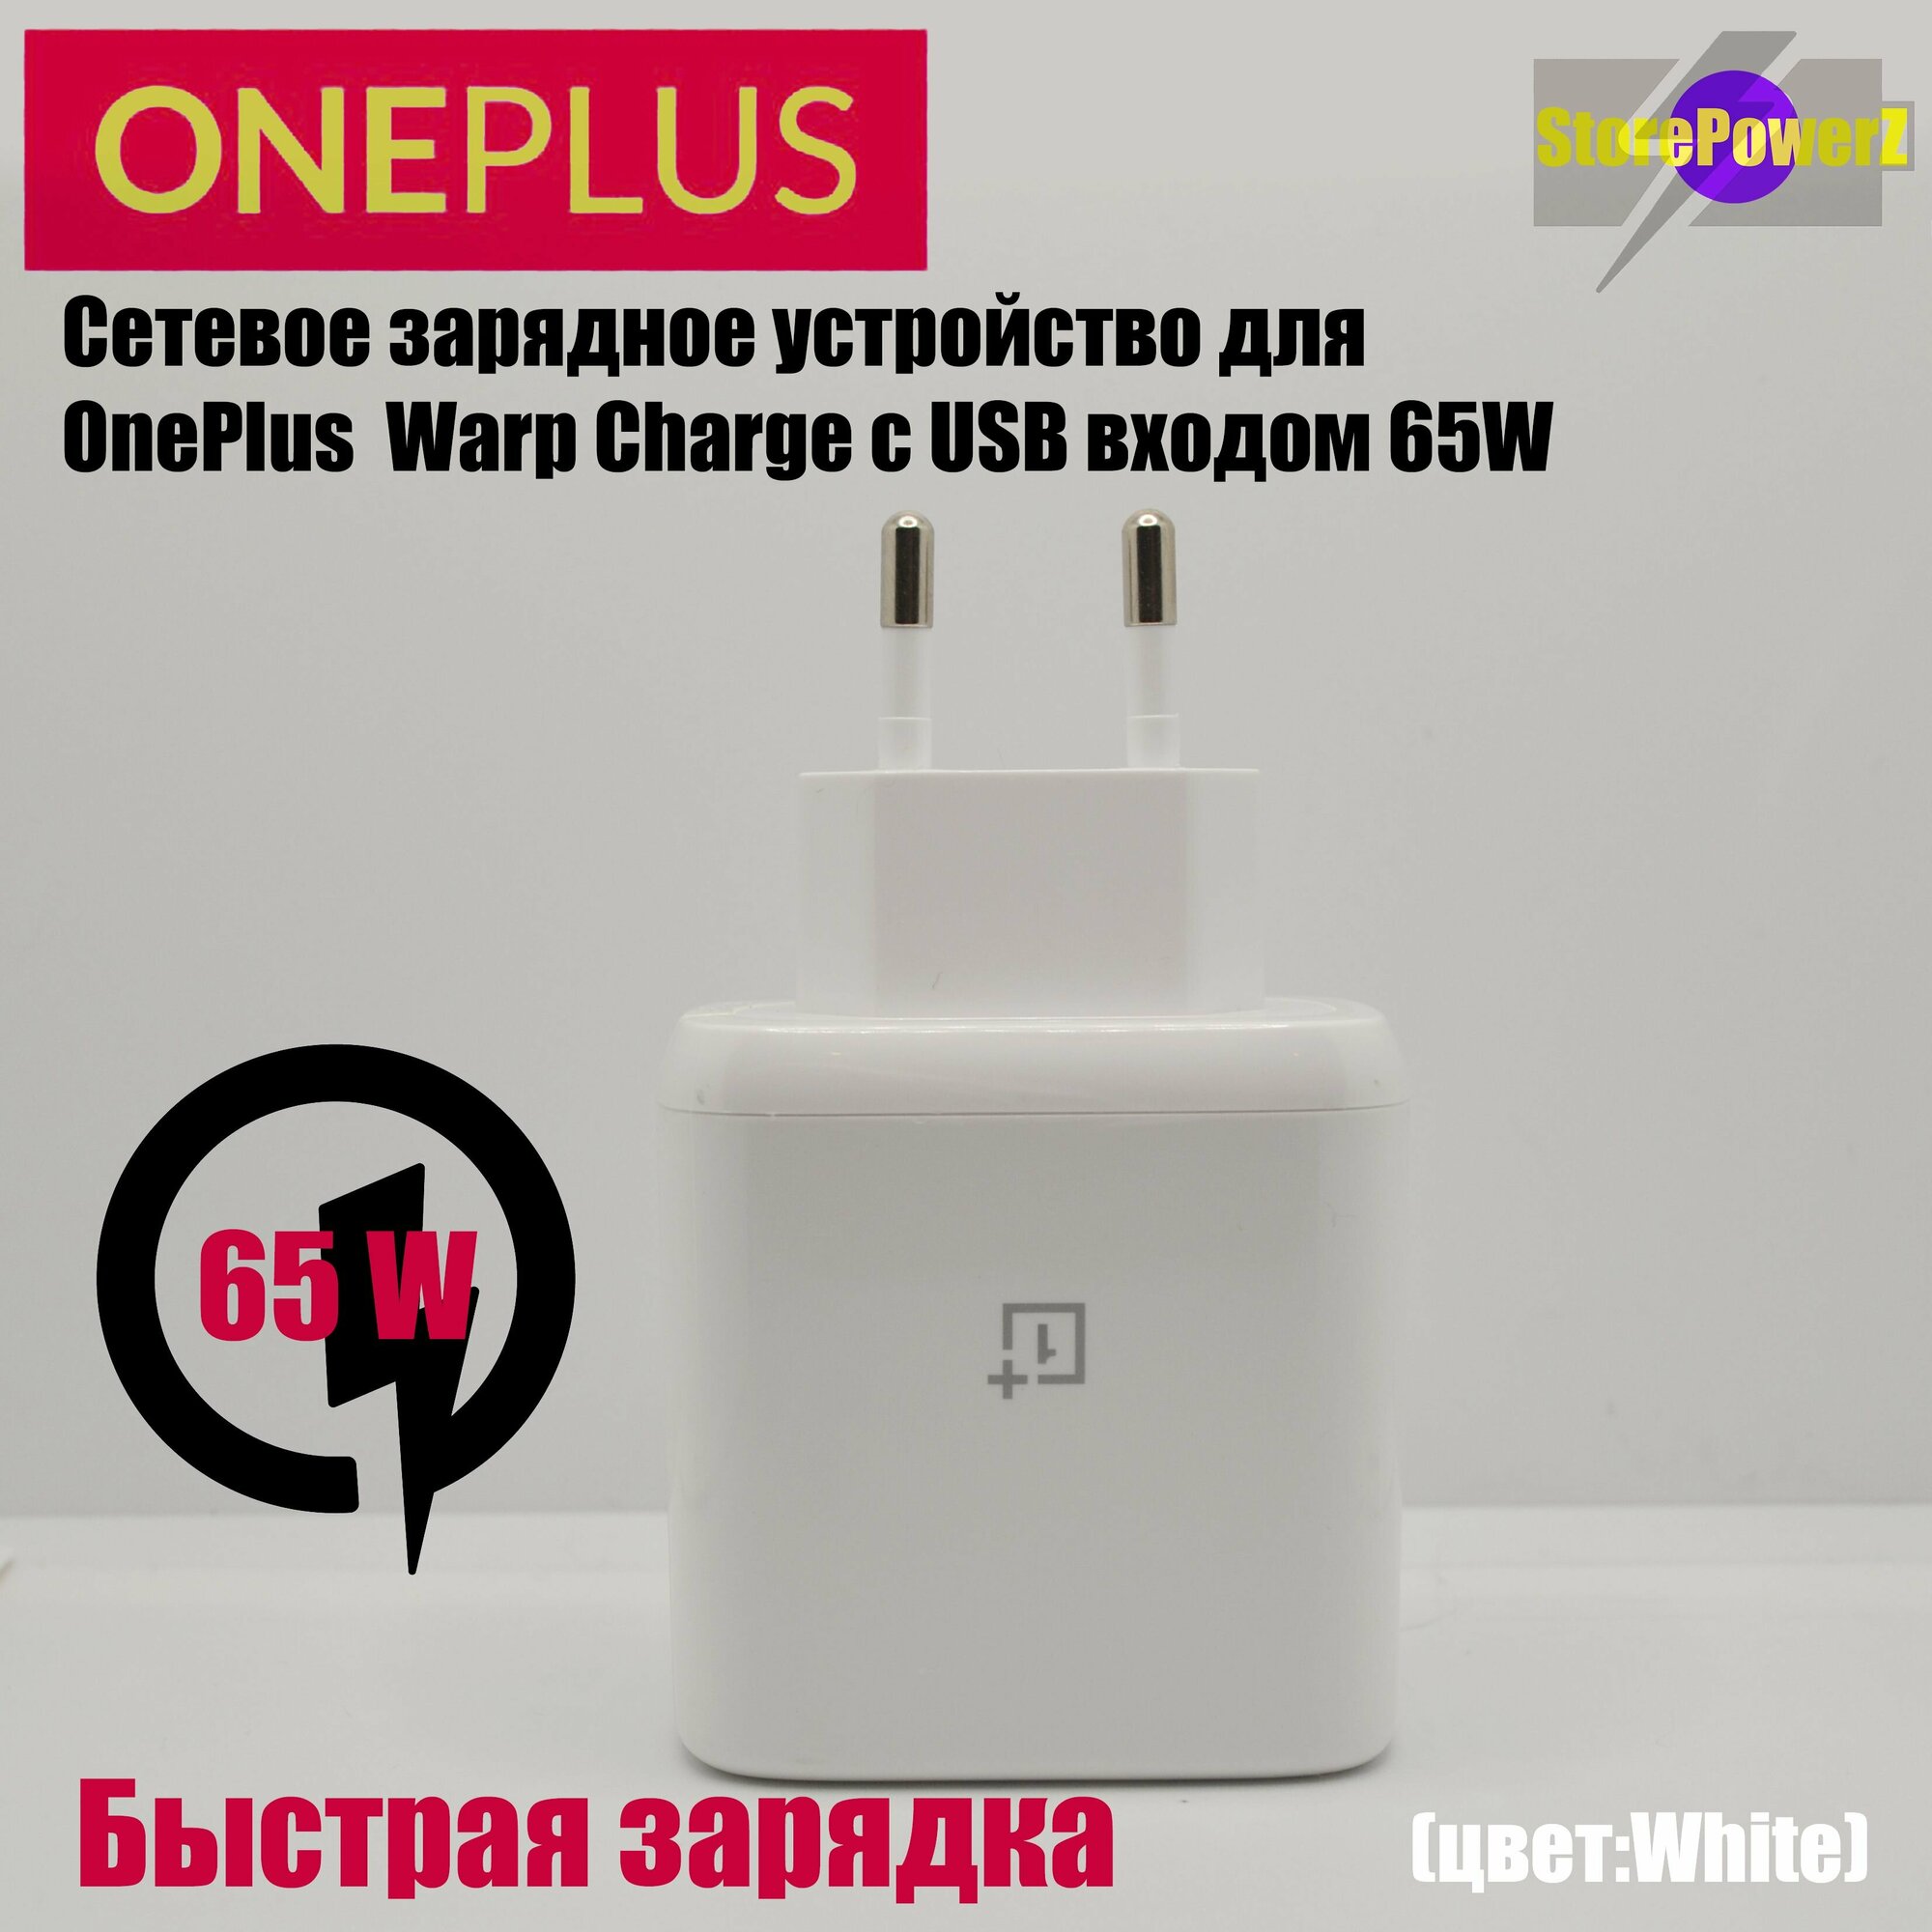 Устройство зарядное сетевое для OnePlus с USB входом 65W Warp Charge, цвет: White